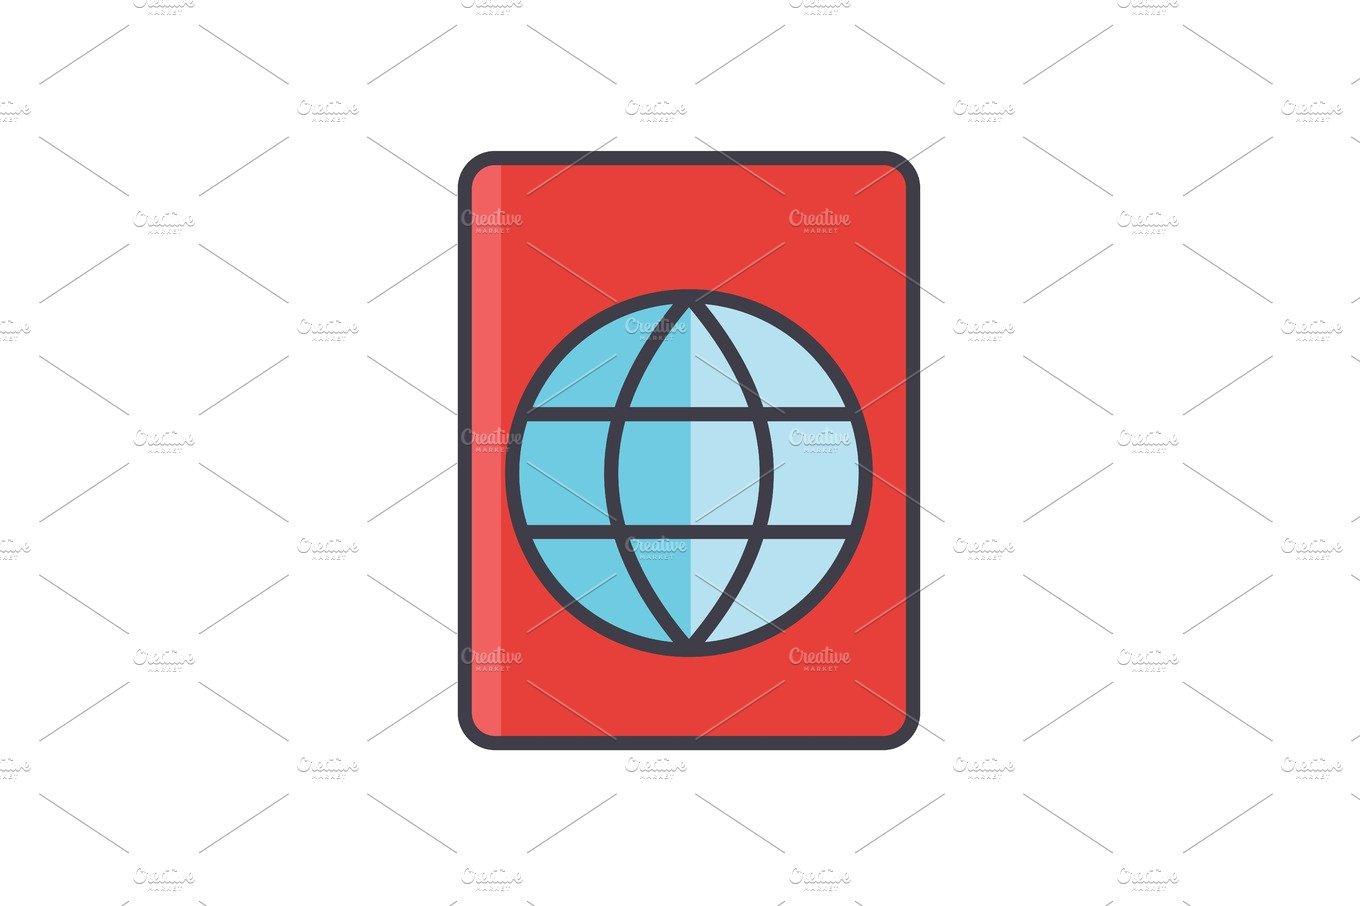 passport visa stamp icon